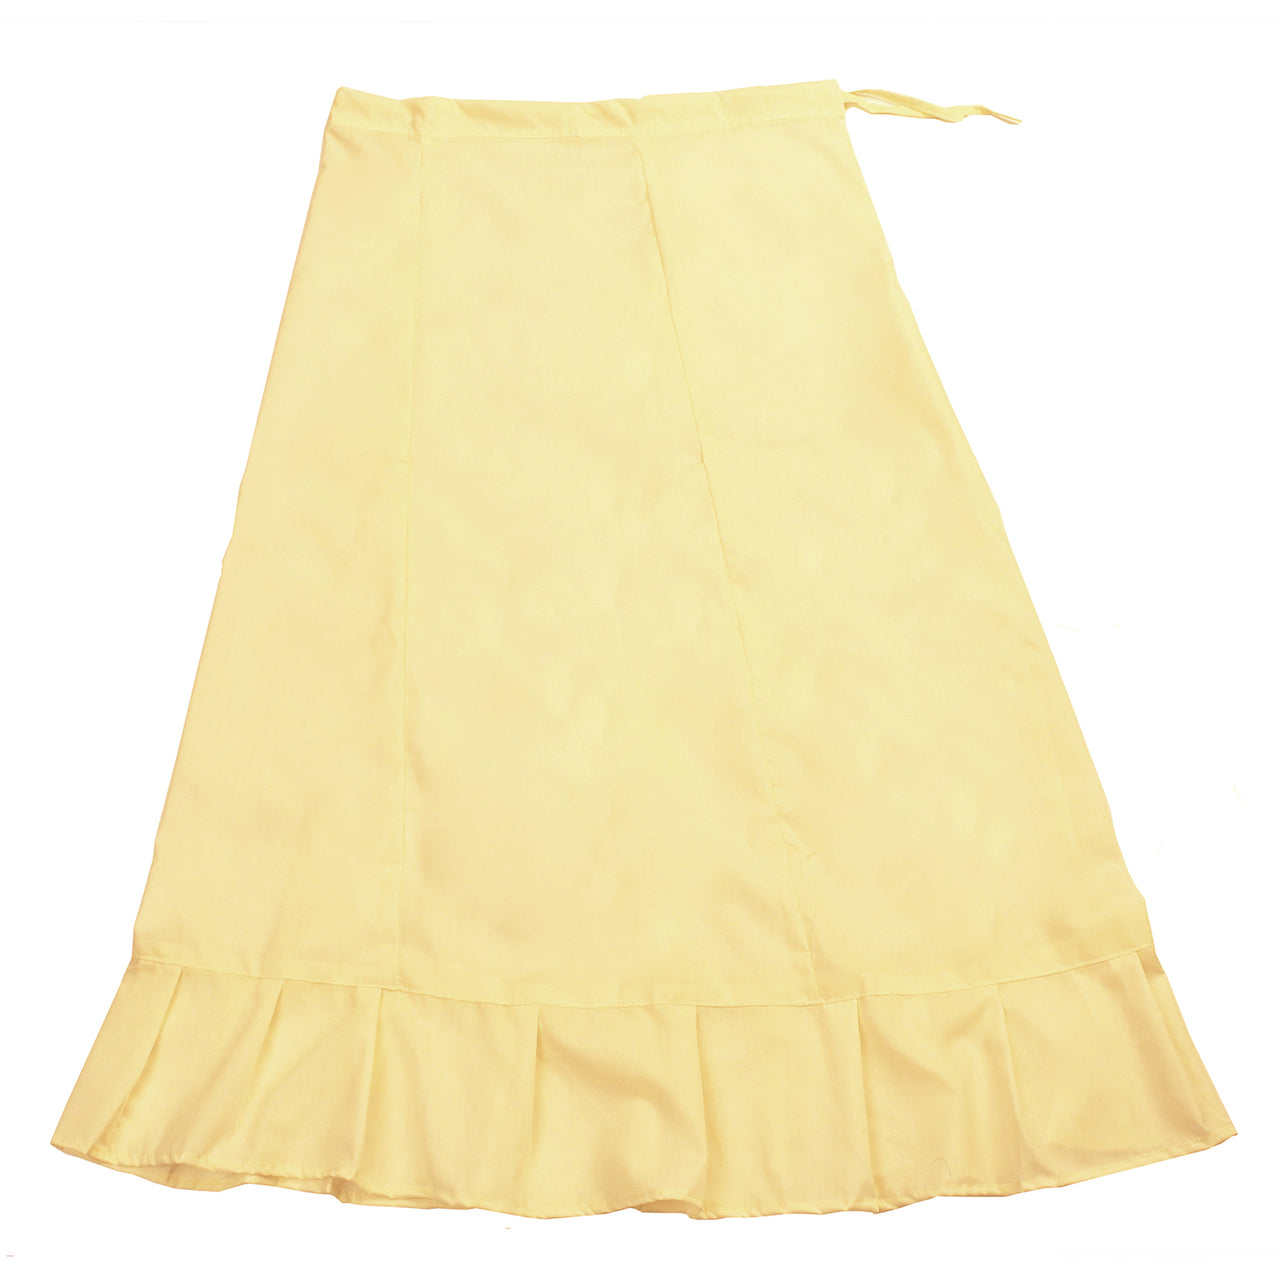 https://cdn.shopify.com/s/files/1/0708/6938/5510/products/Sari-Petticoat-The-Fabric-Centre-Ivory-Skirt-1_291615e2-700f-4057-be04-13cabb15872c.jpg?v=1678404268&width=1280